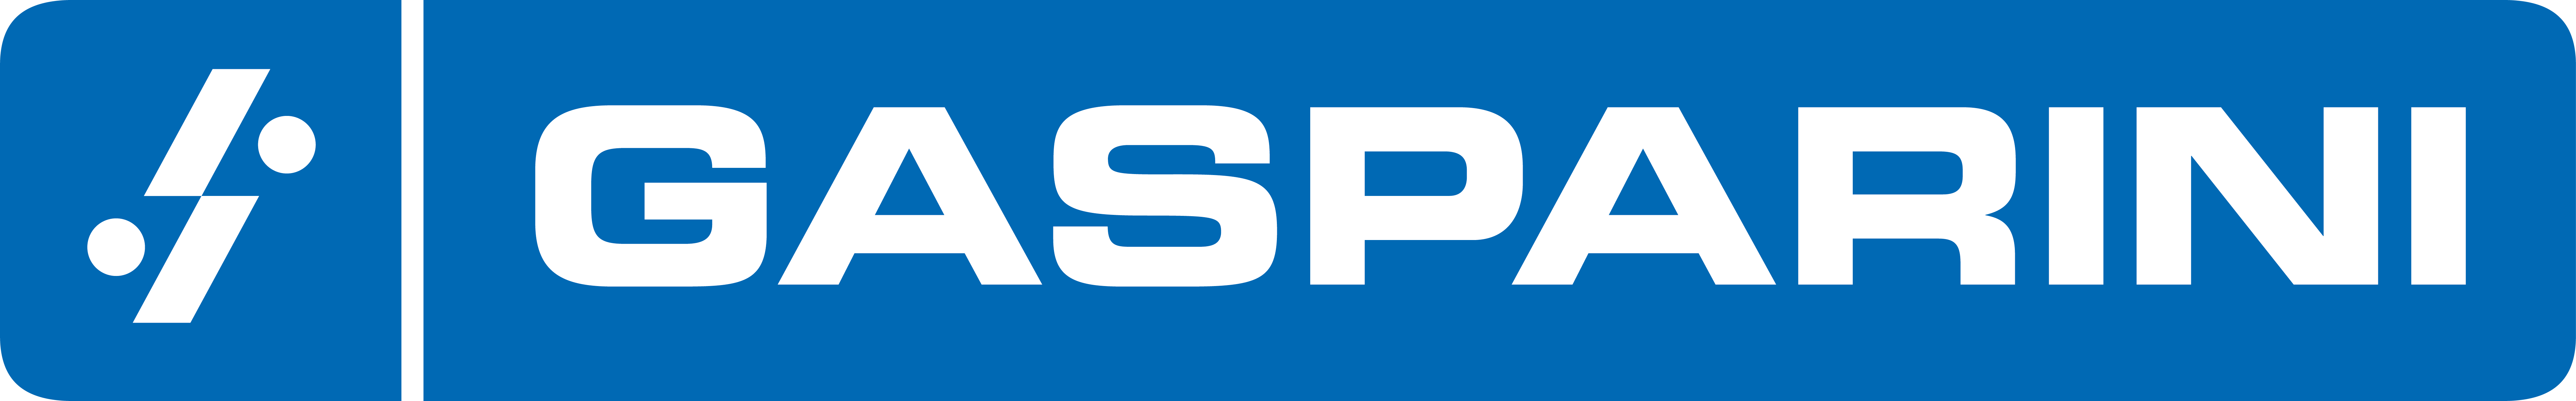 Gasparini Industries logo